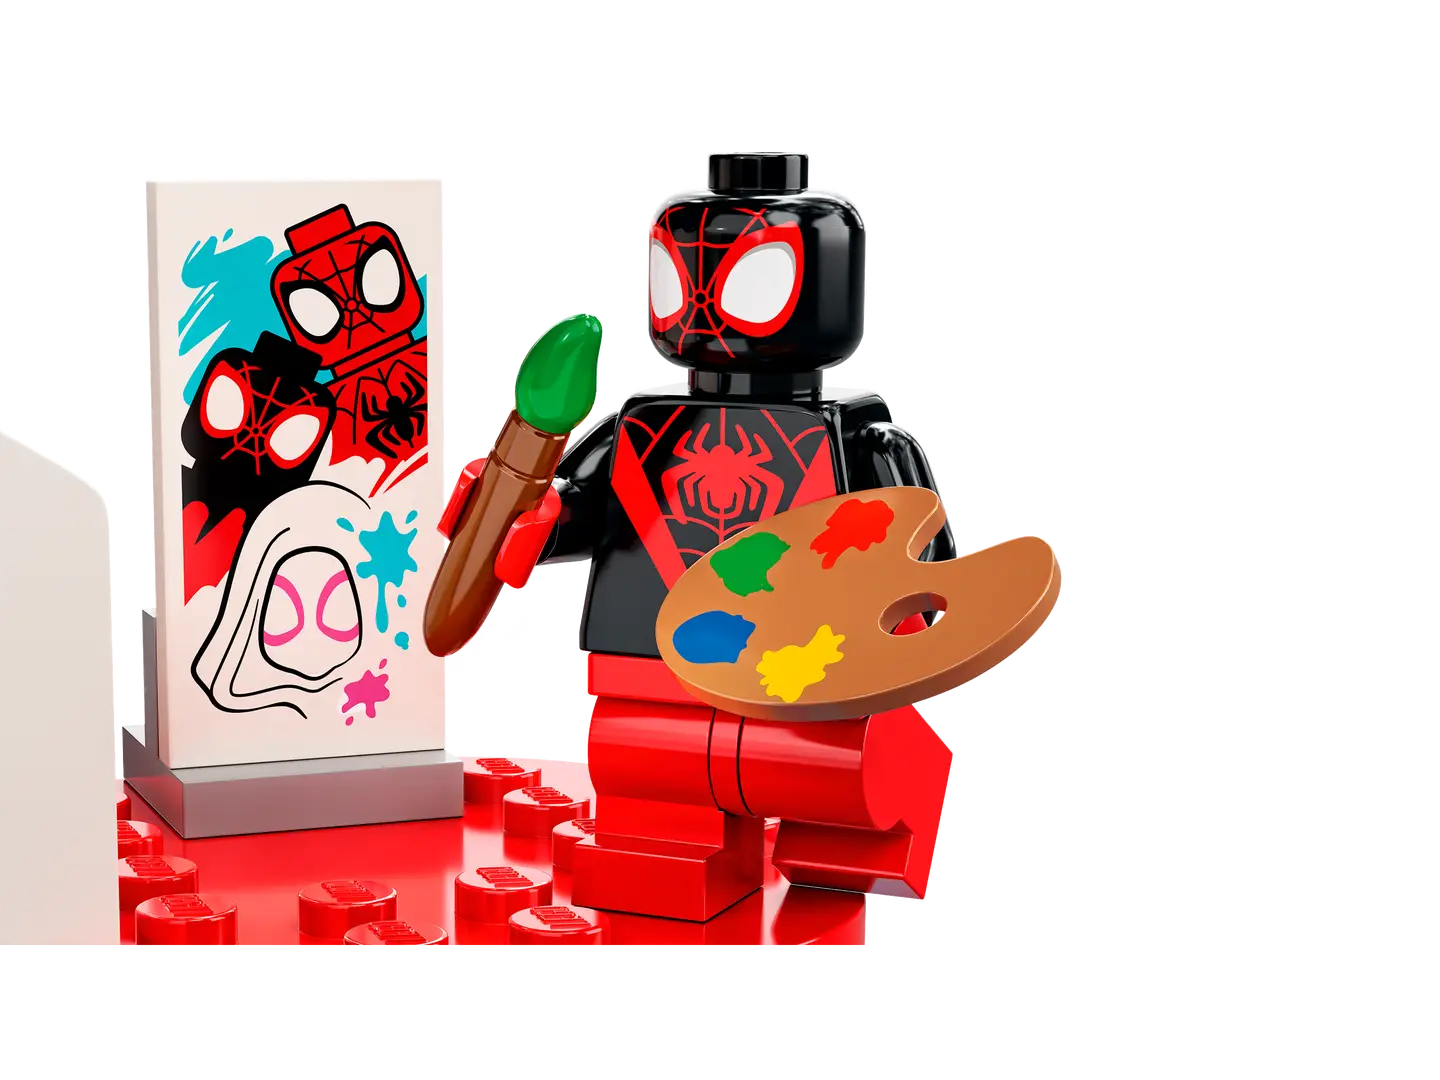 Lego Spider-Man - Spider-Man's Cozy Headquarters